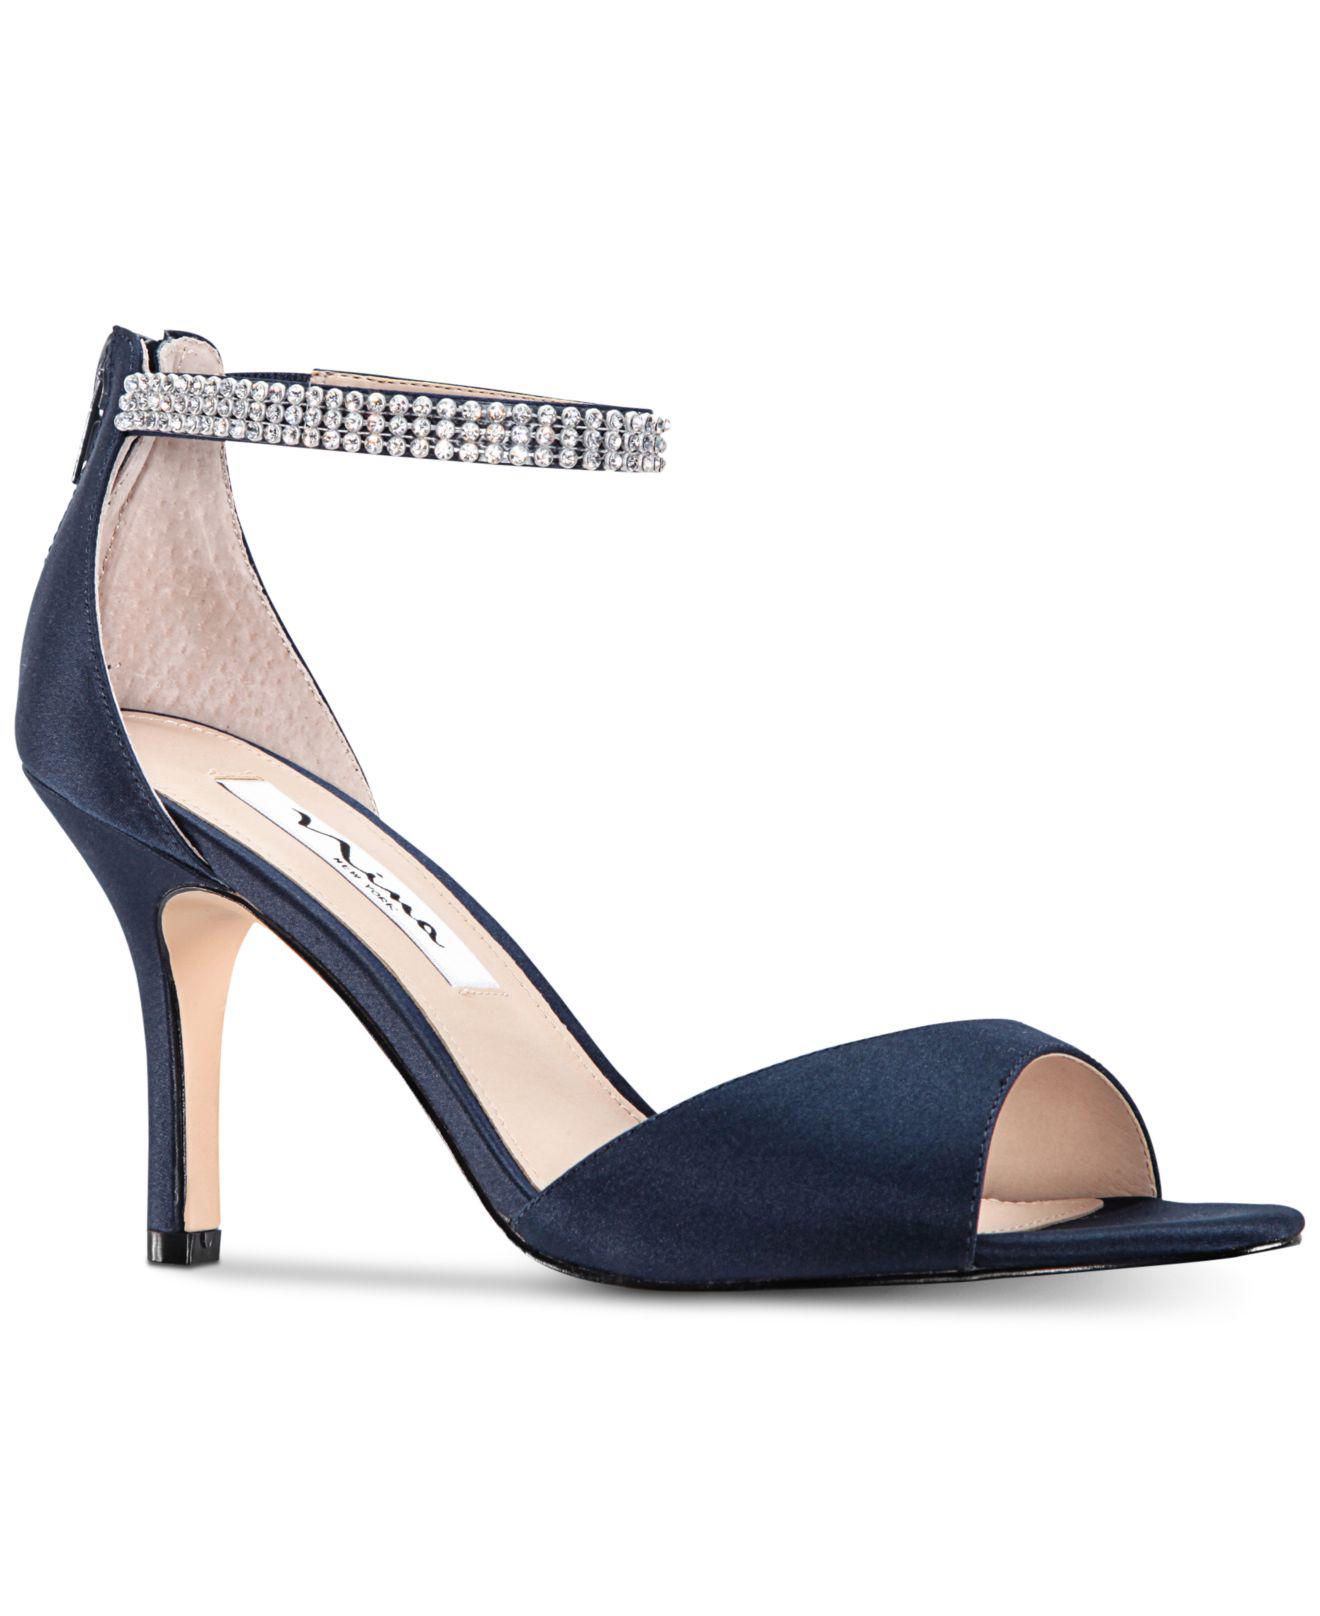 Nina Satin Volanda Evening Dress Sandals in Blue - Lyst